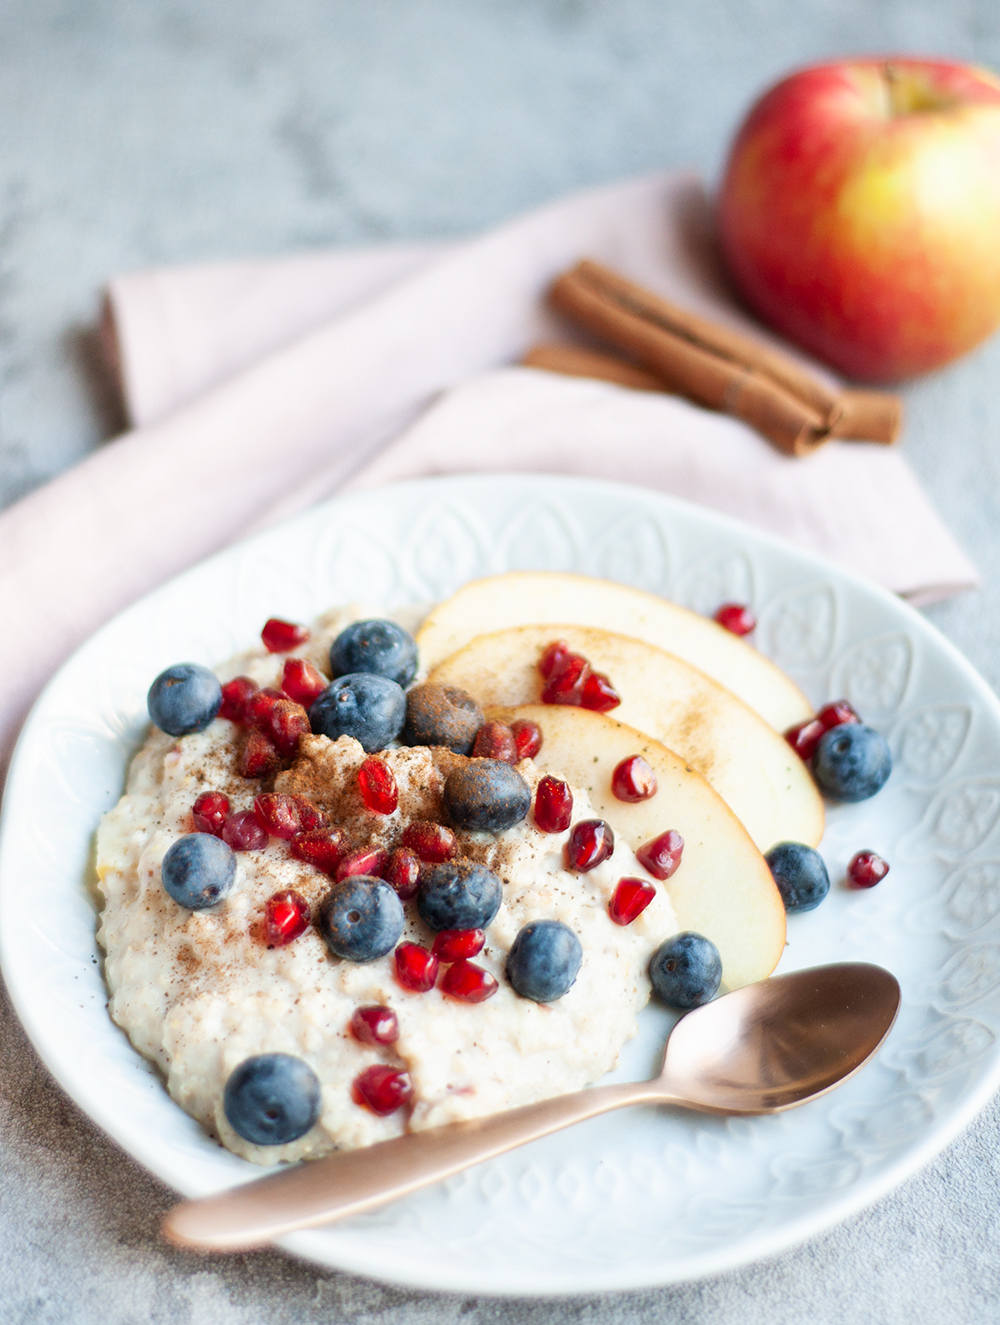 Apfel-Zimt-Porridge mit Blaubeeren und Granatapfel | Serendipity